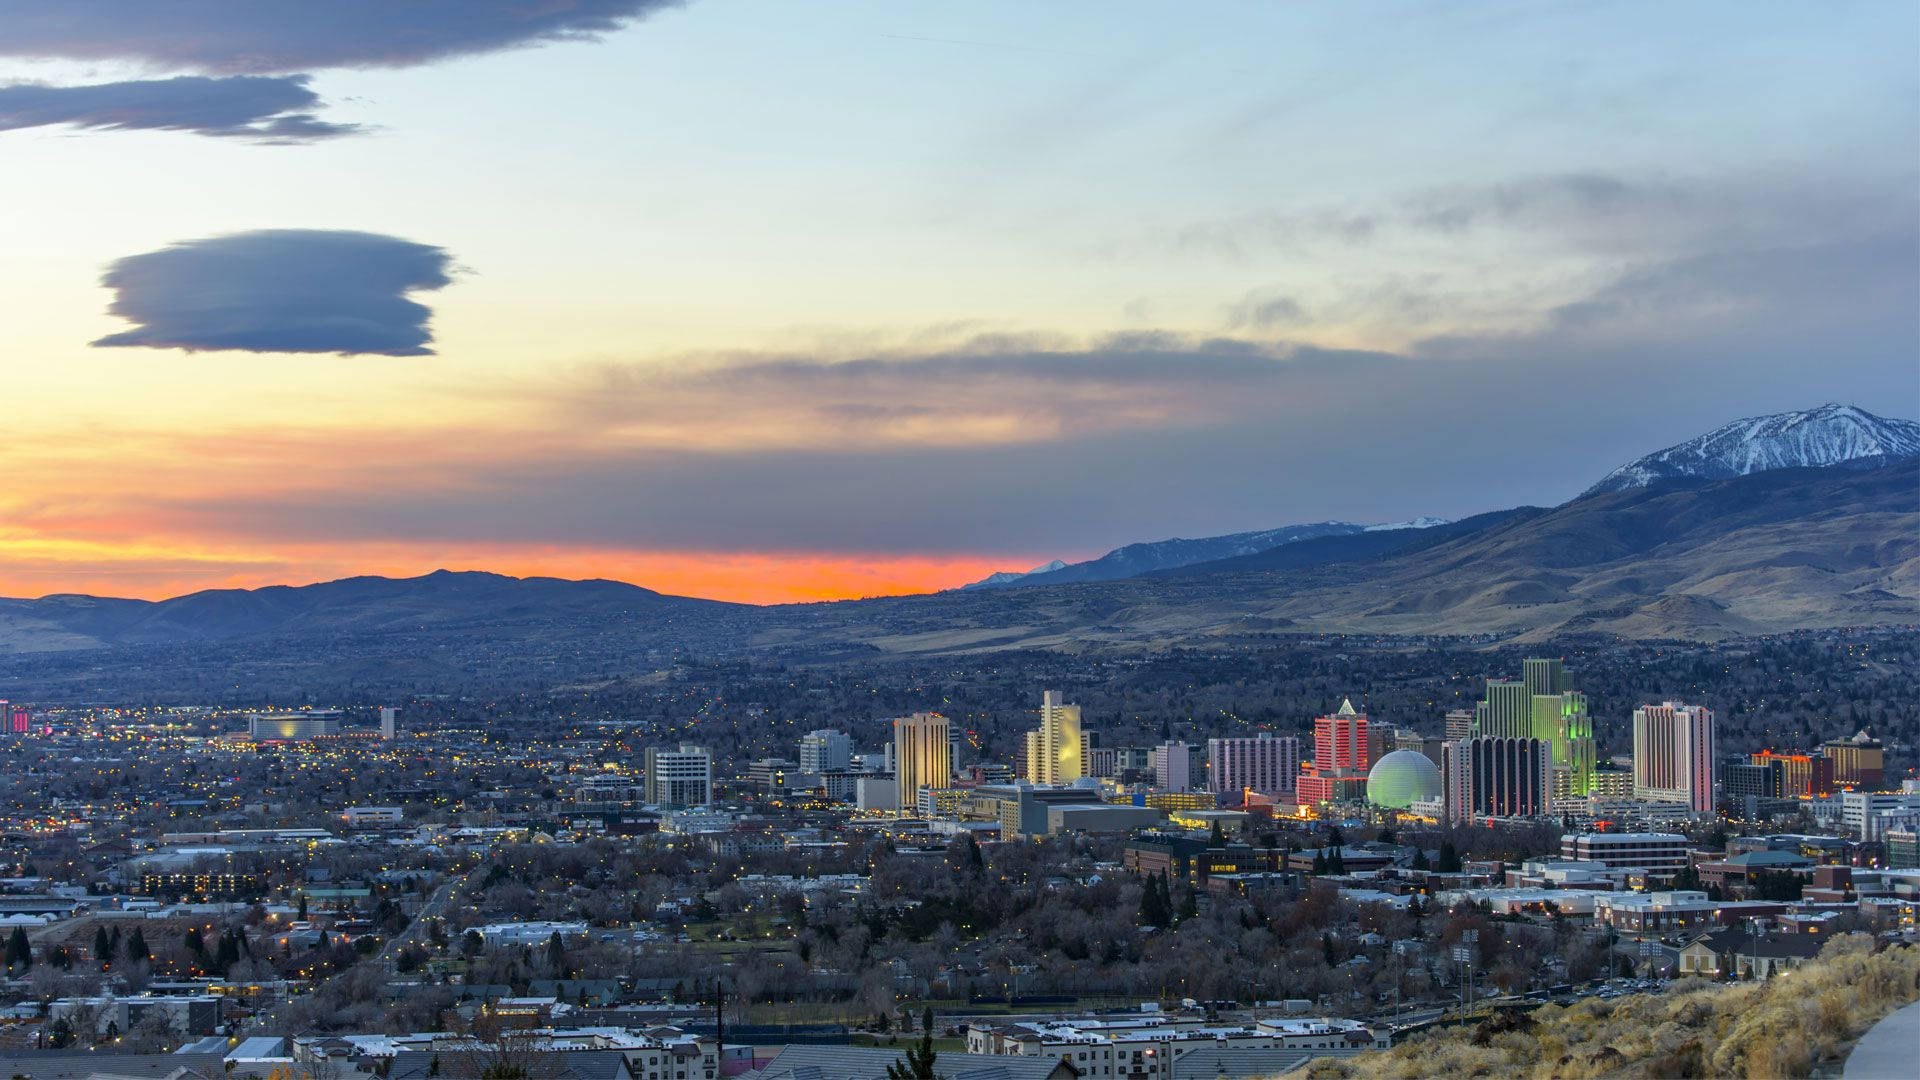 The Stunning View Of Reno's Skyline At Sunset.